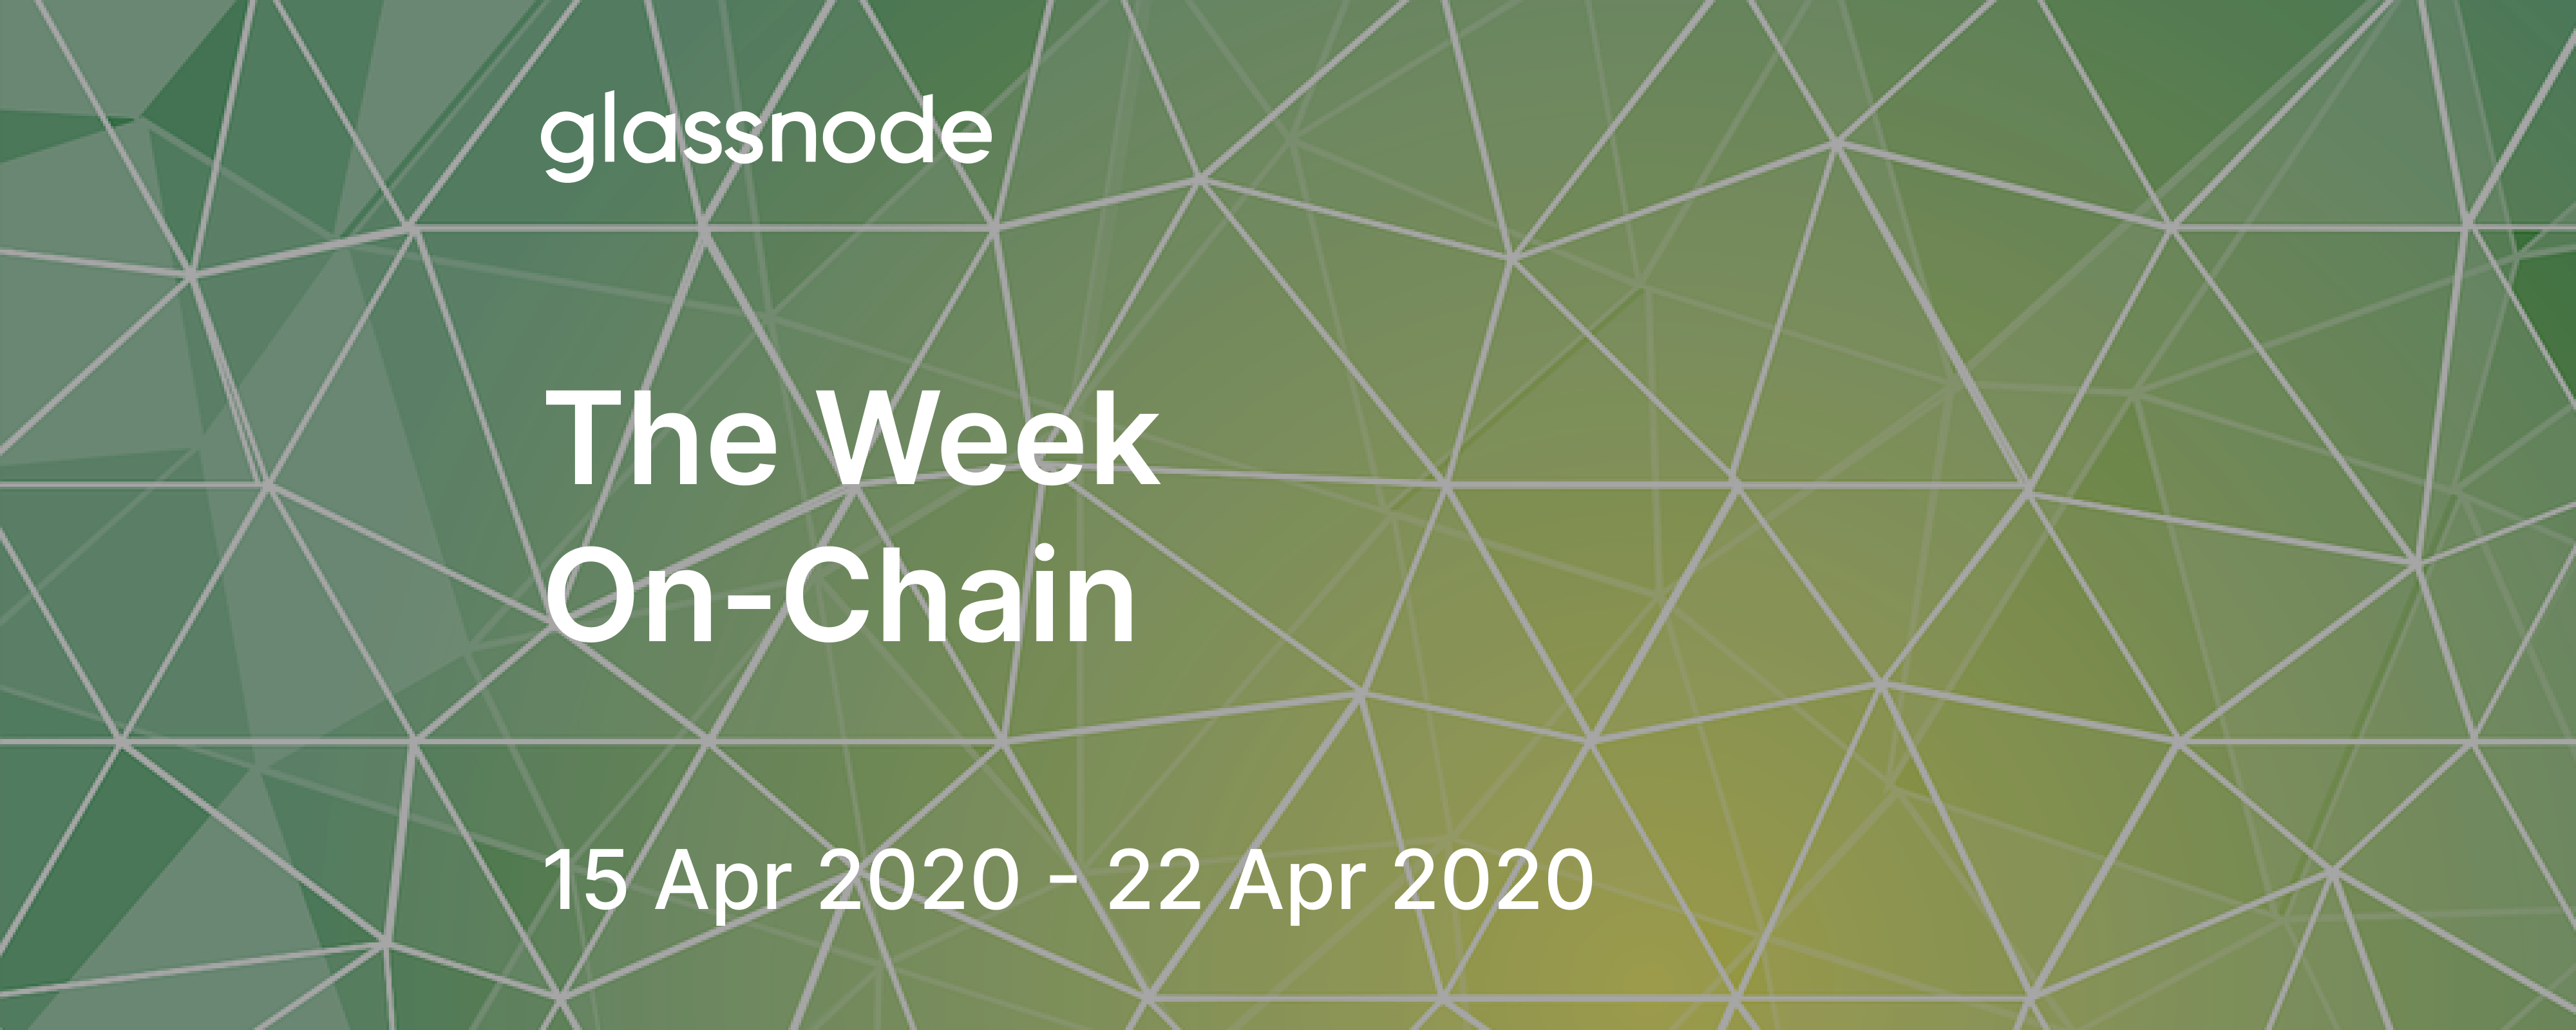 The Week On-Chain (15 Apr 2020 - 22 Apr 2020)